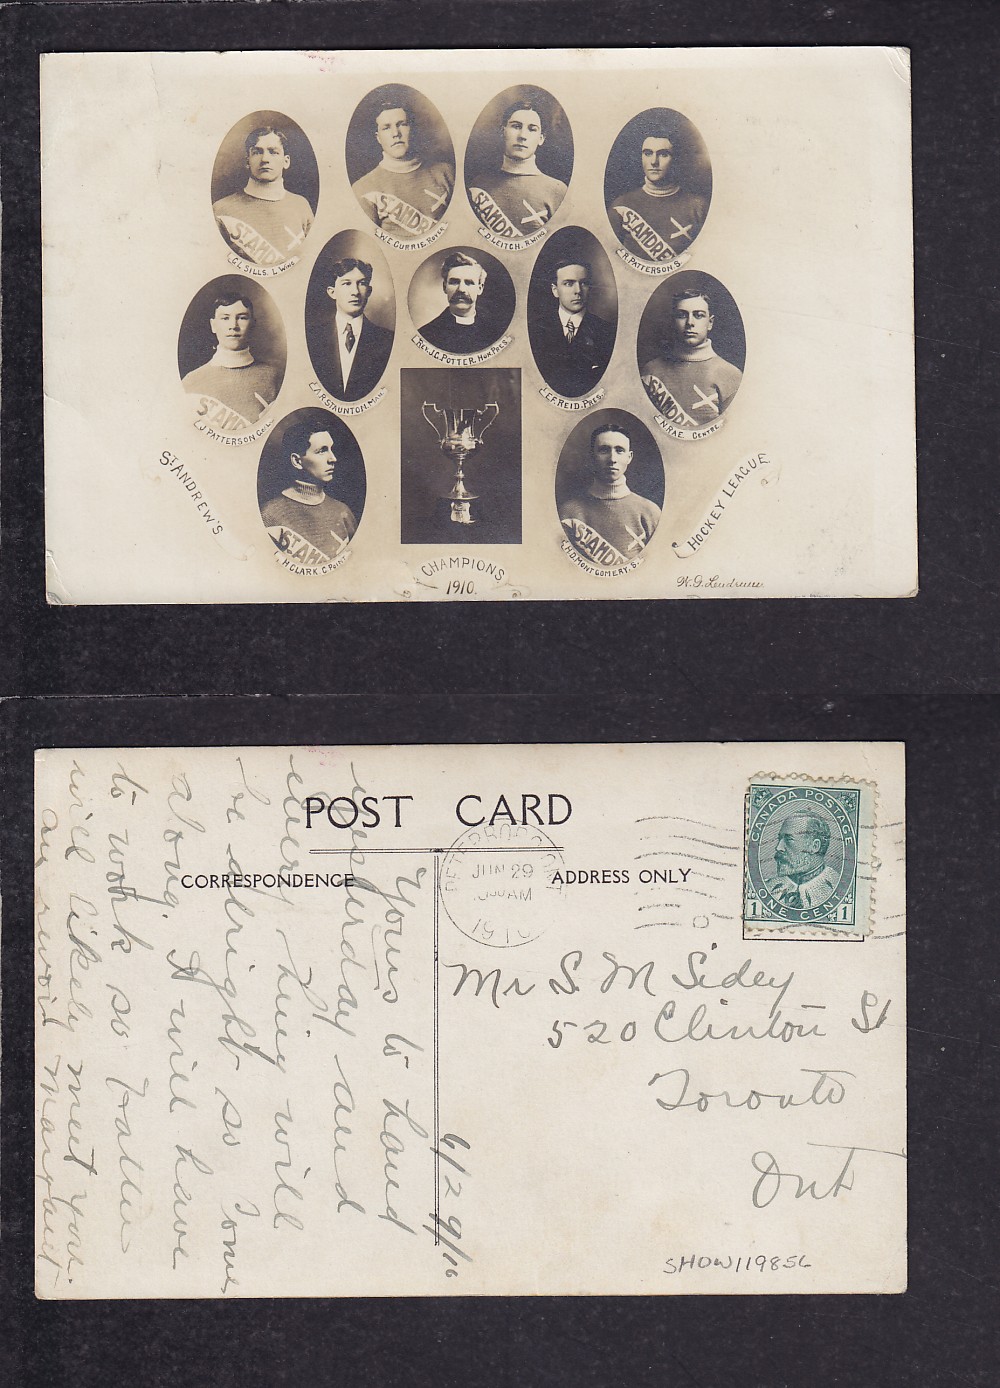 1910 TORONTO HOCKEY TEAM POST CARD photo